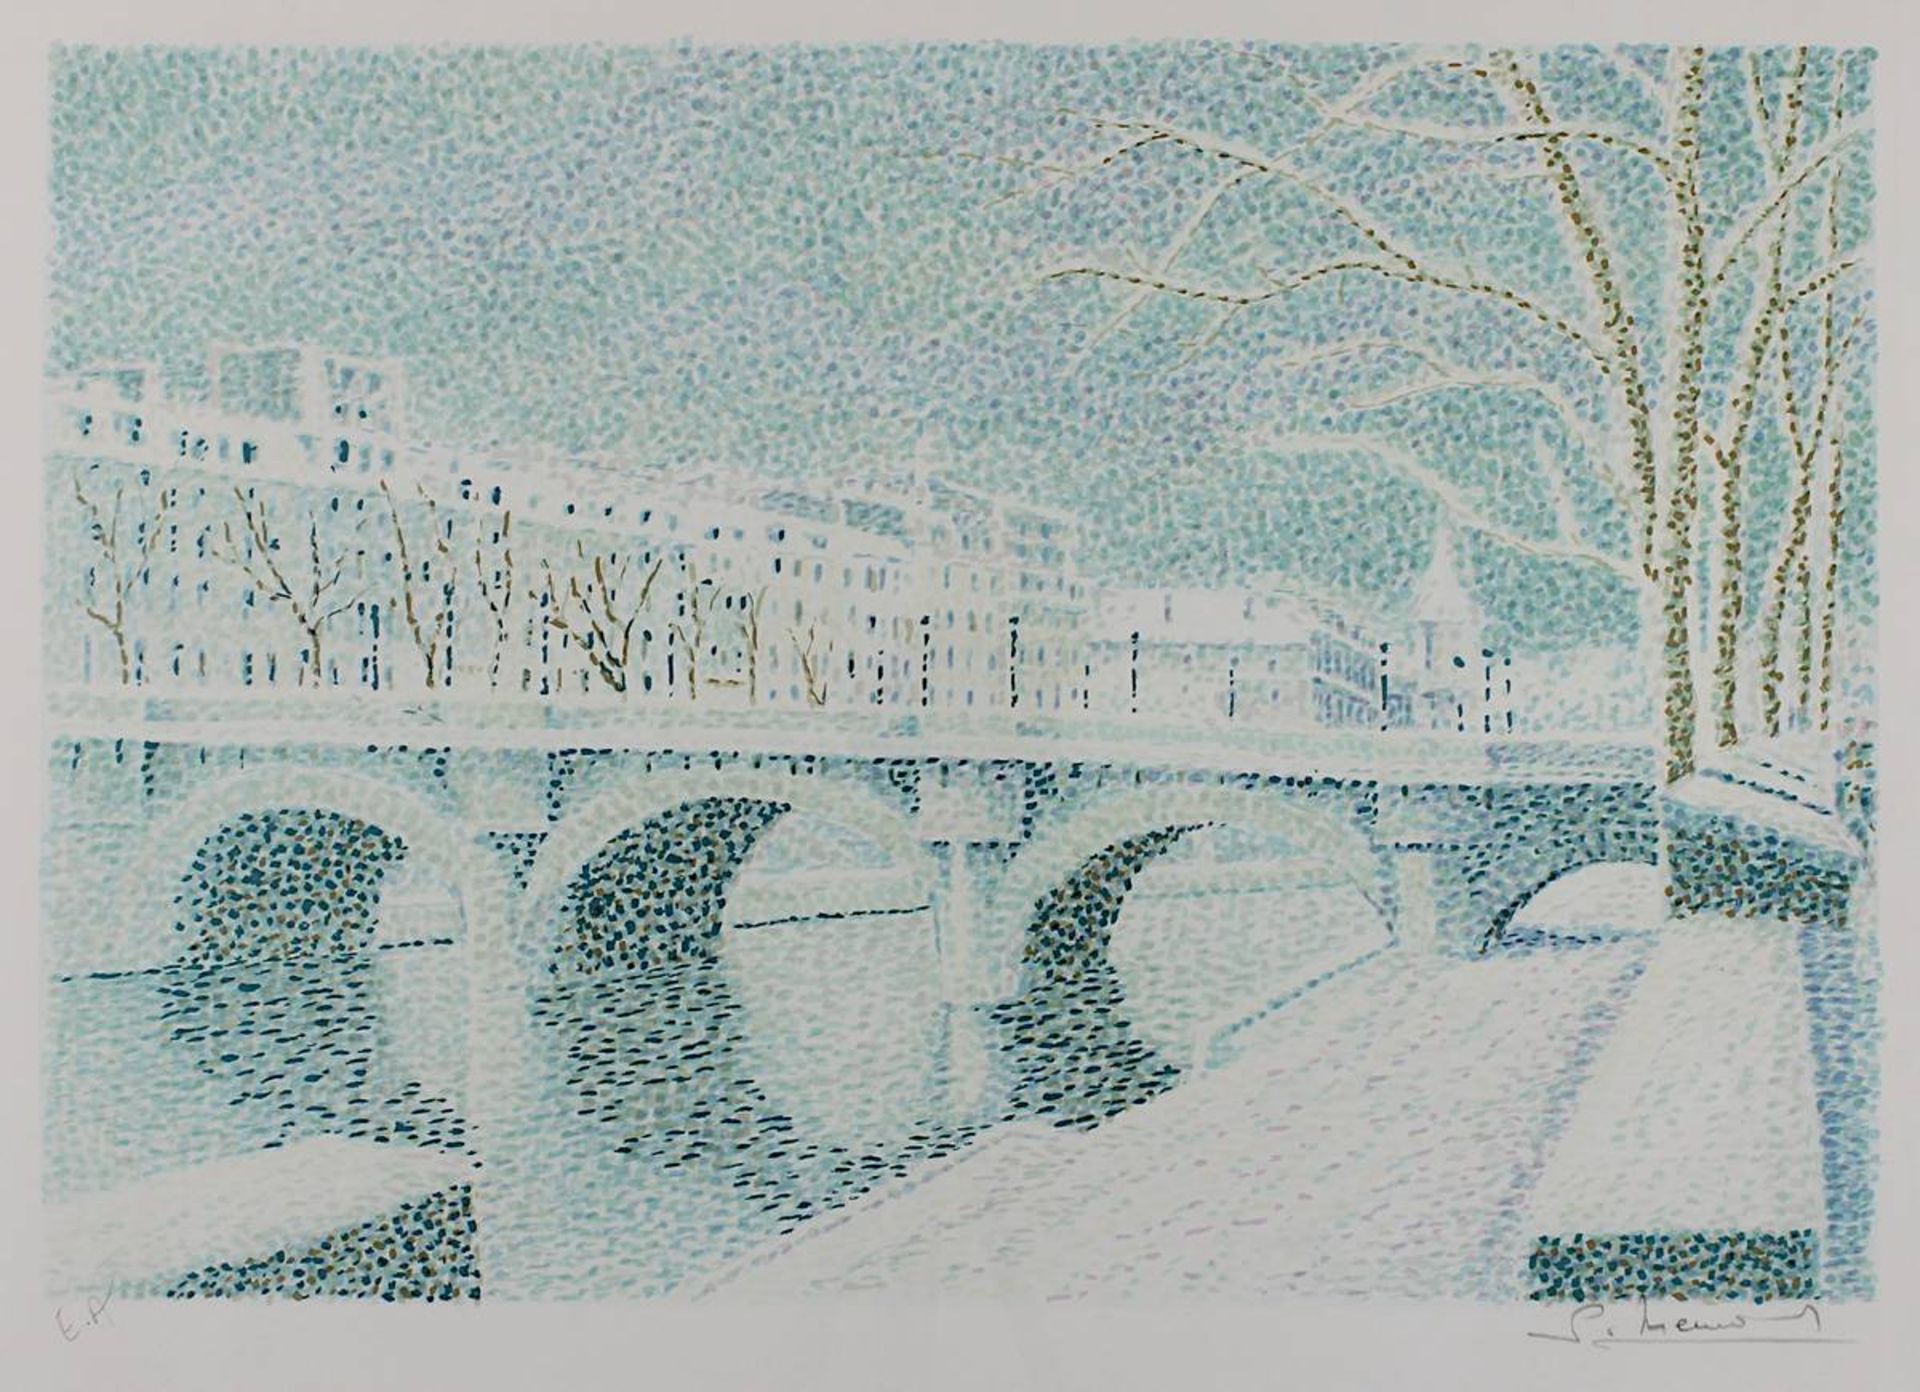 Mendjisky, Serge (Paris 1929 - 2017 Paris), Flussufer mit Bogenbrücke, wohl Seineufer in Paris, - Image 2 of 2